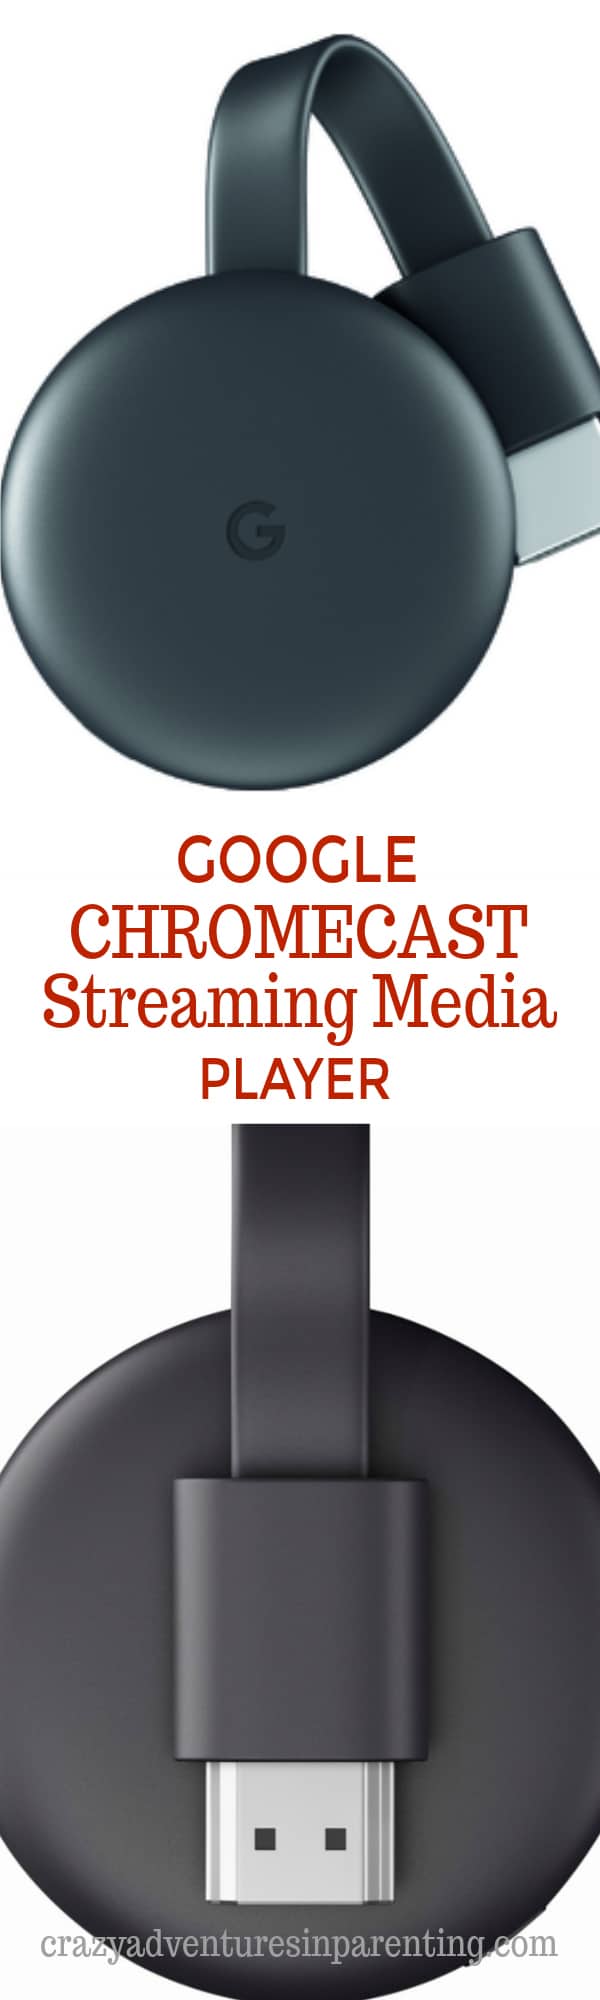 ChromeCast Streaming Music Player